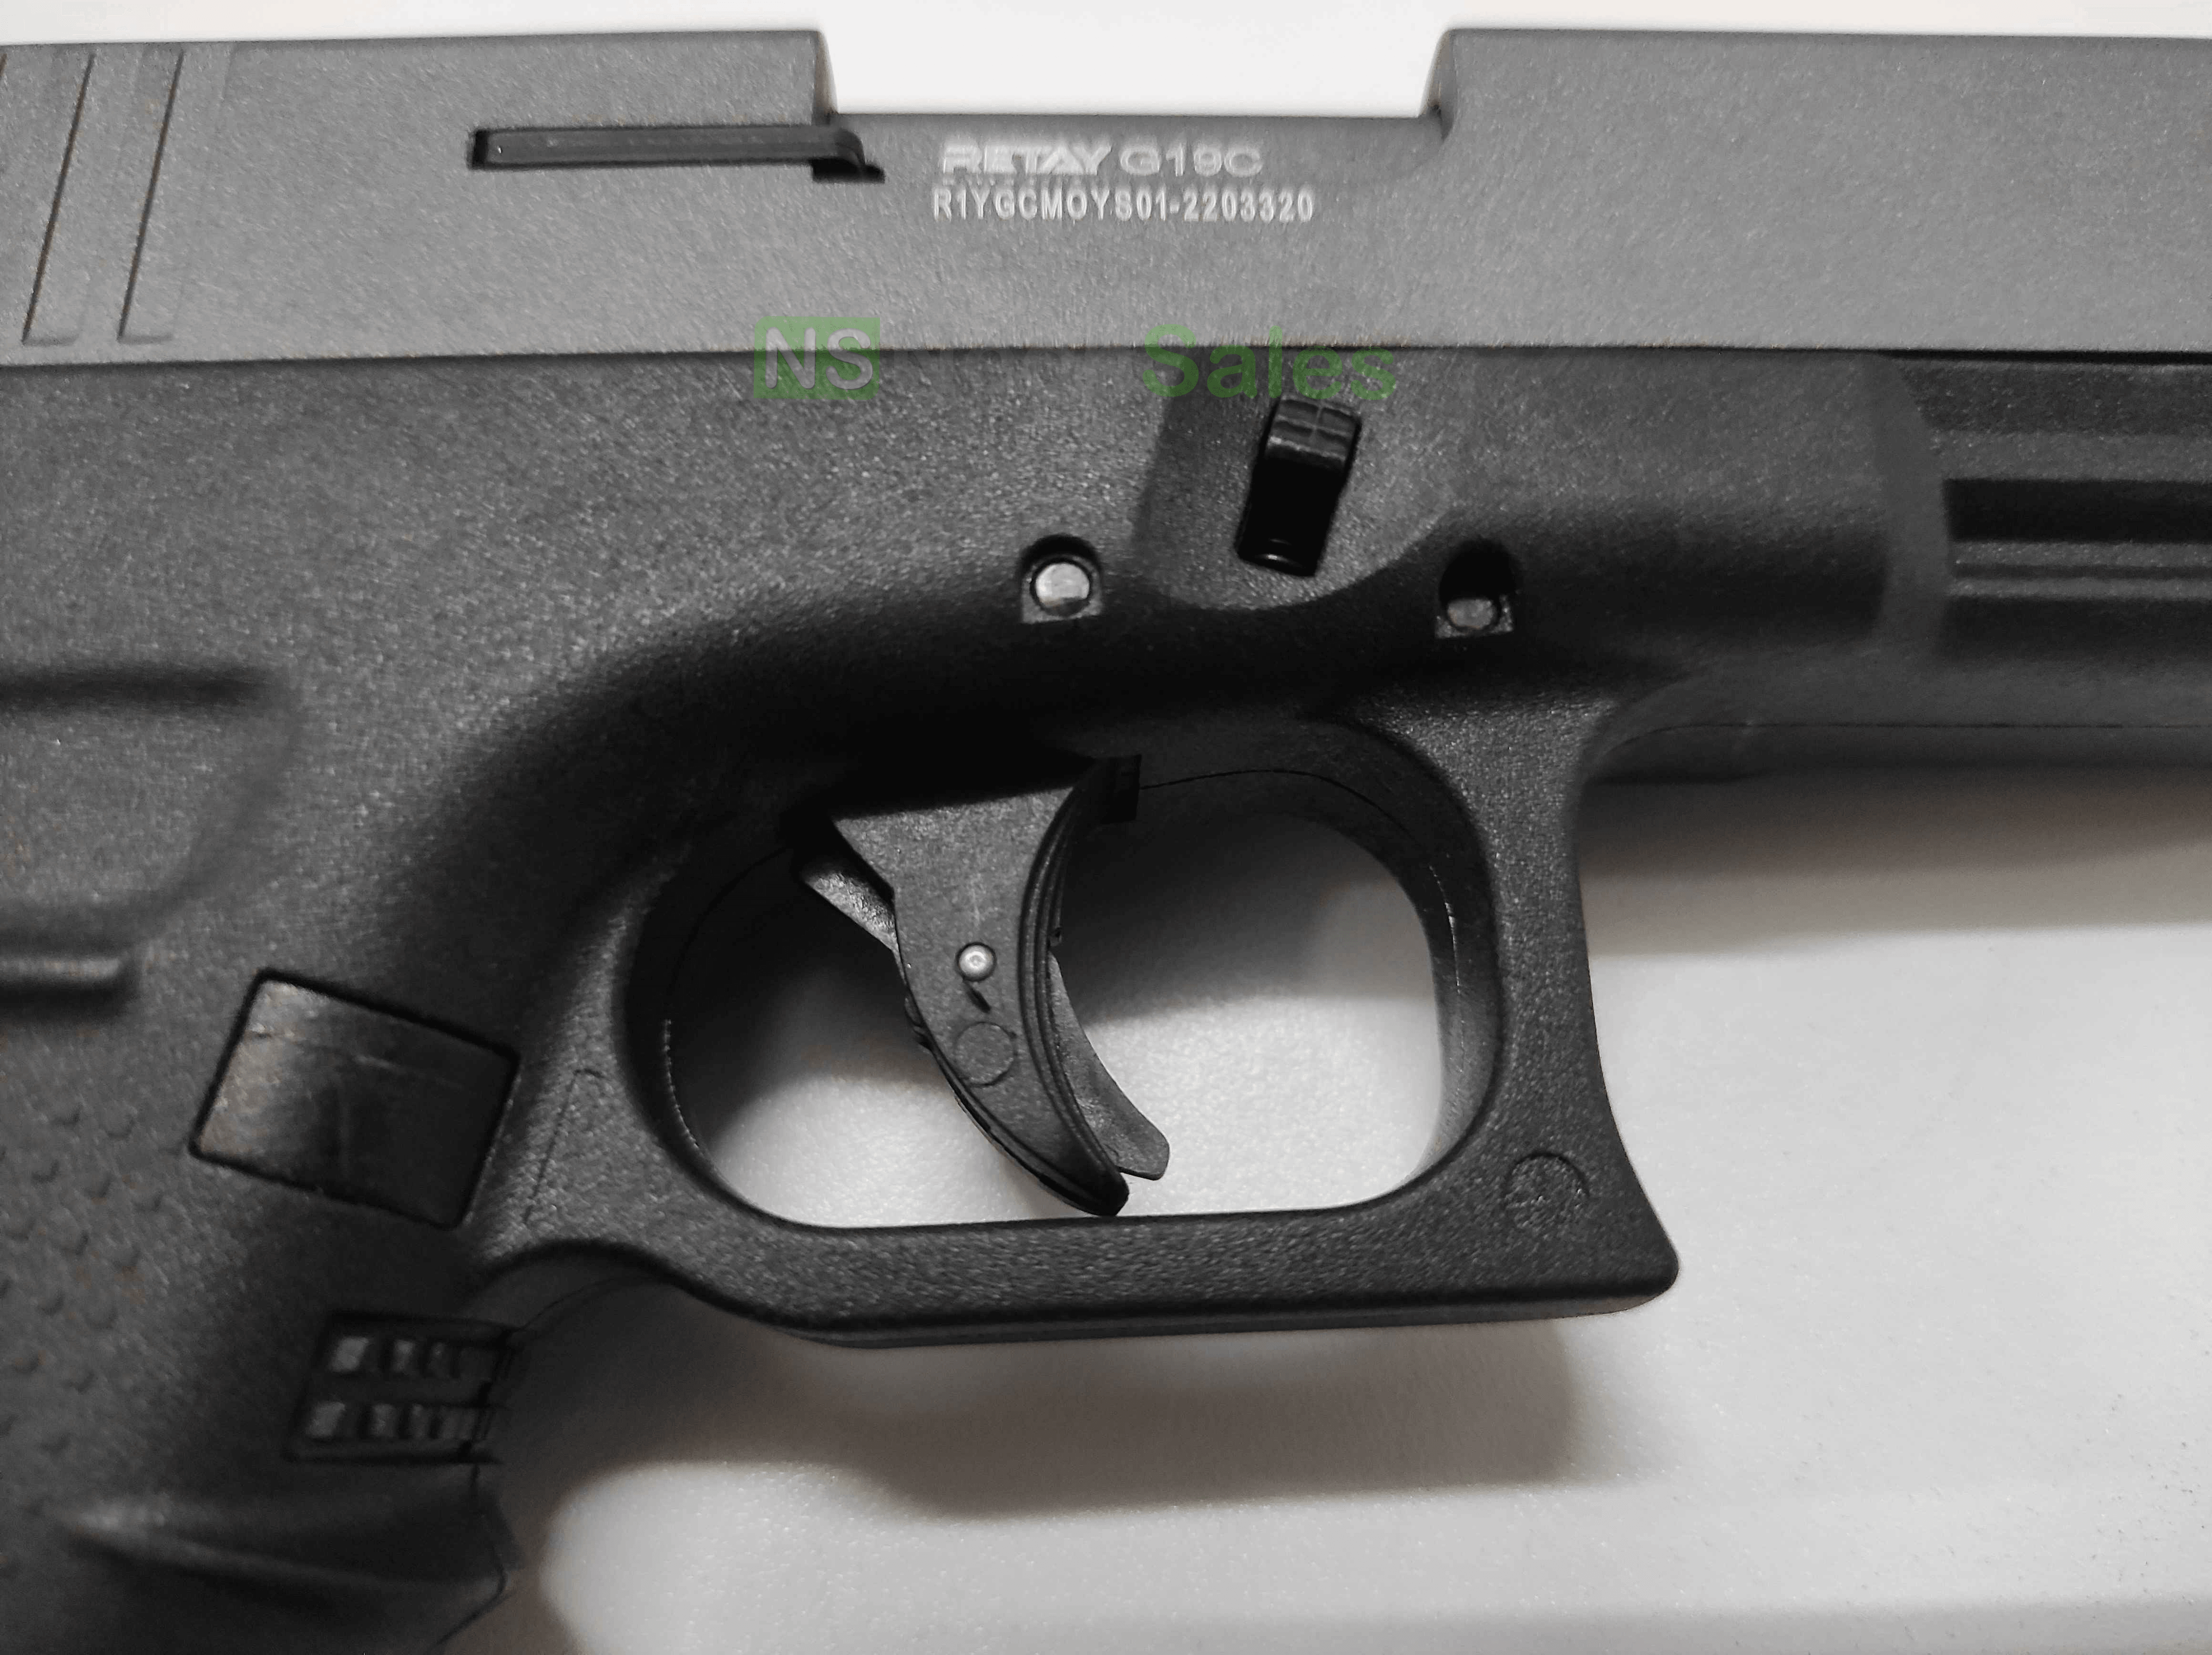 RETAY G19C BLANK GUN - FUME